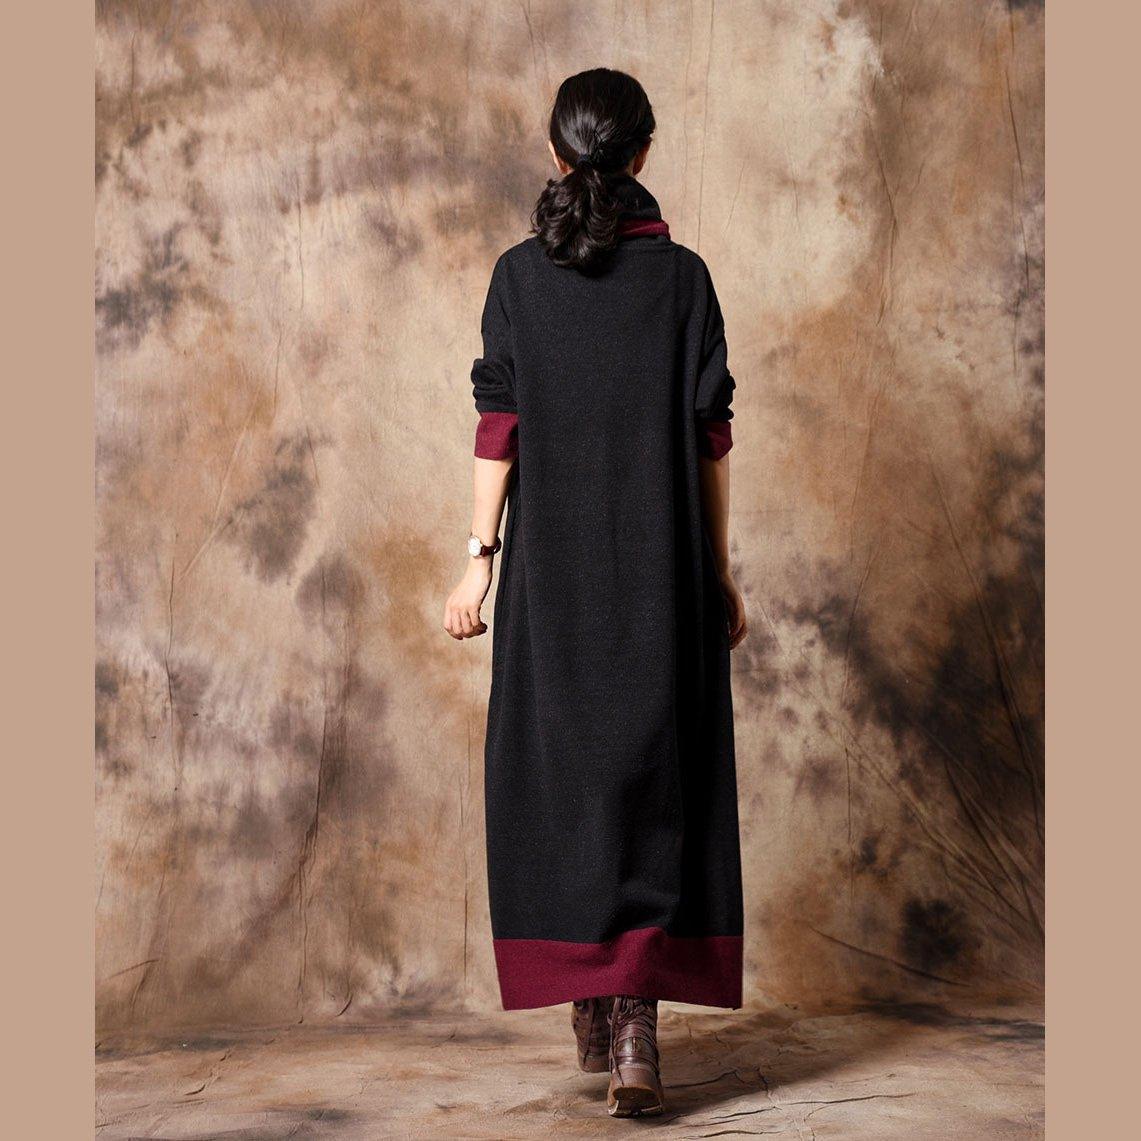 Women Sweater weather Street Style Batwing Sleeve black DIY knit top high neck dress - Omychic